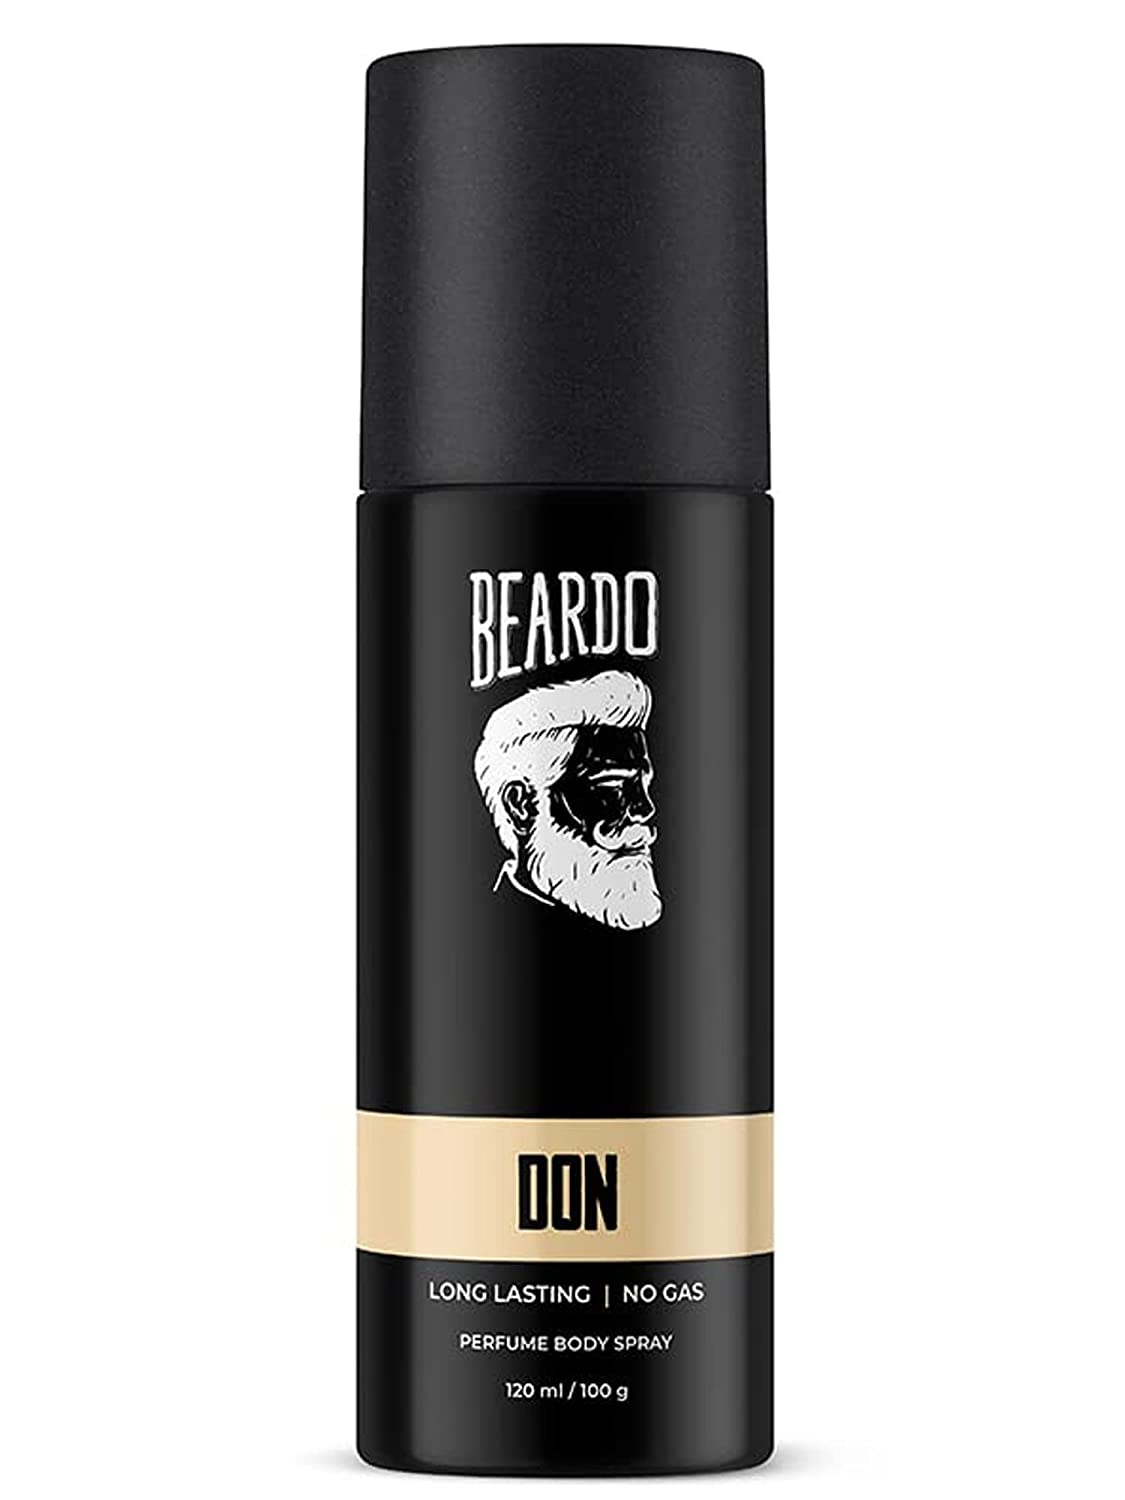 Beardo don long lasting body spray